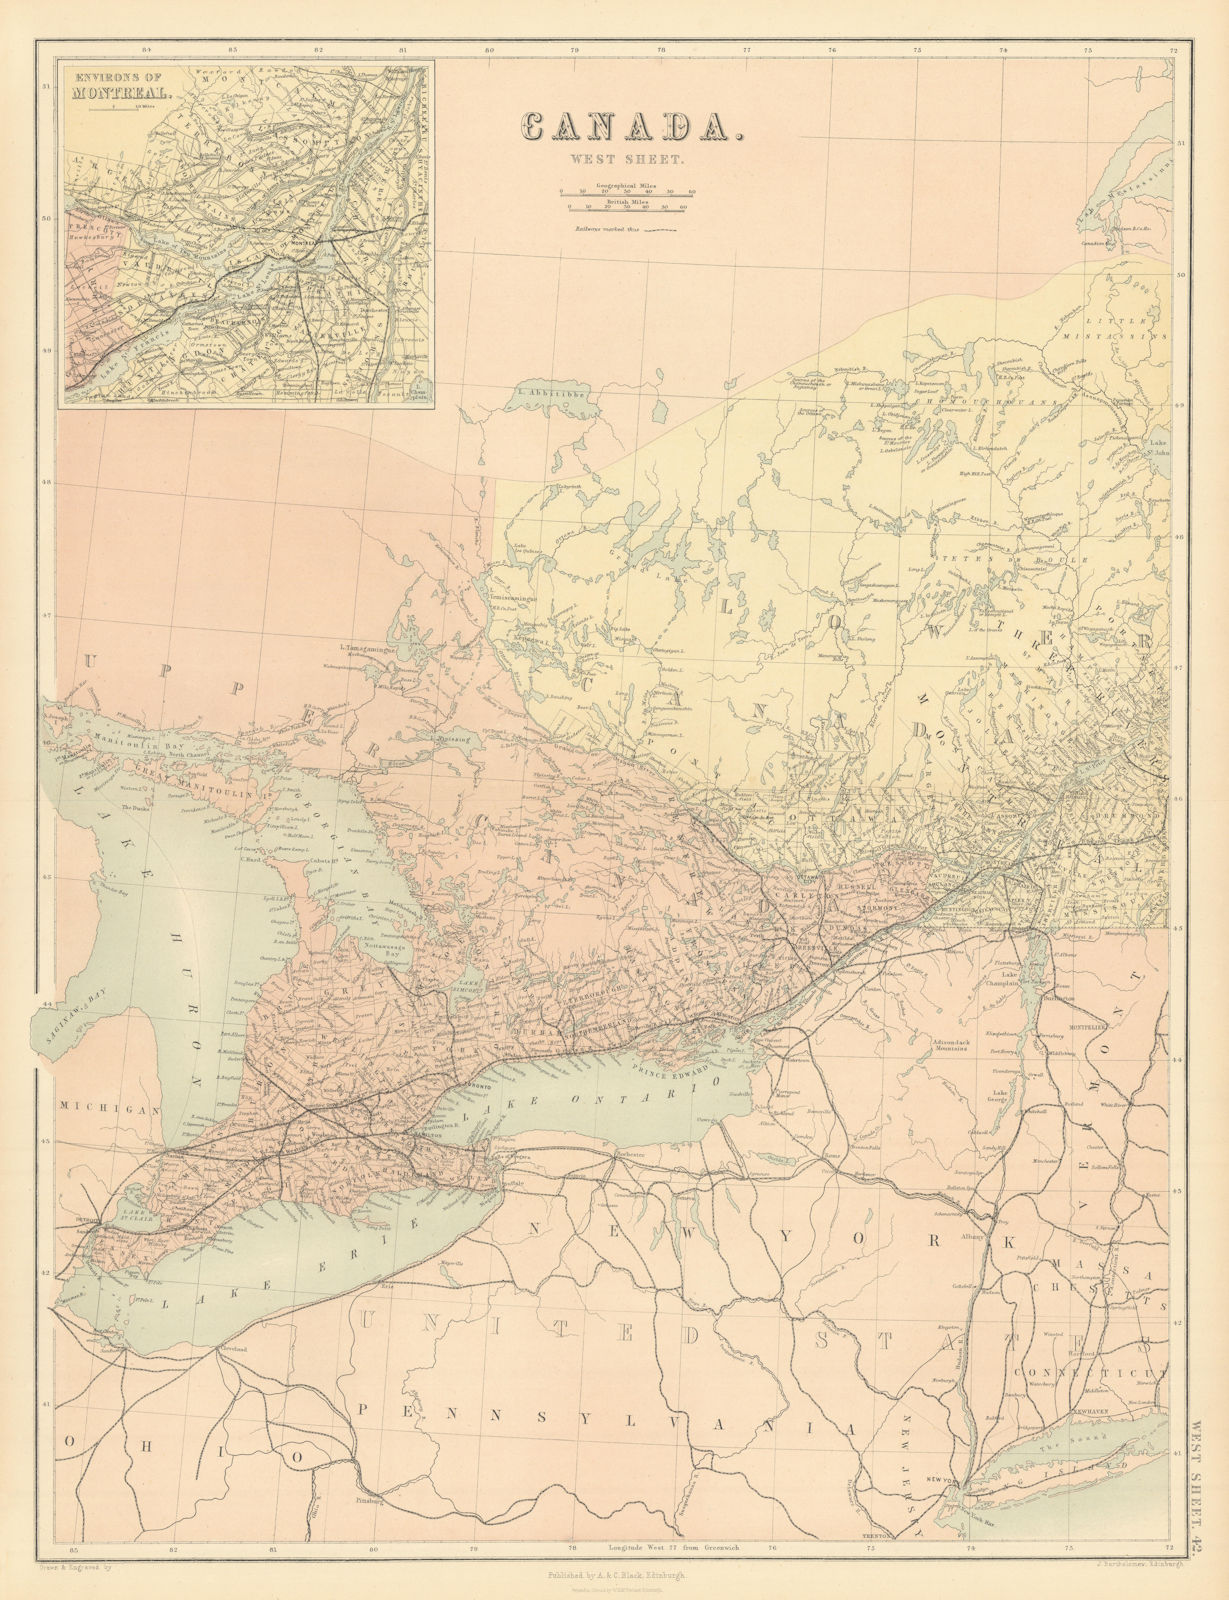 Canada West Sheet. Quebec. Montreal environs. Lakes Huron Erie Ontario 1862 map